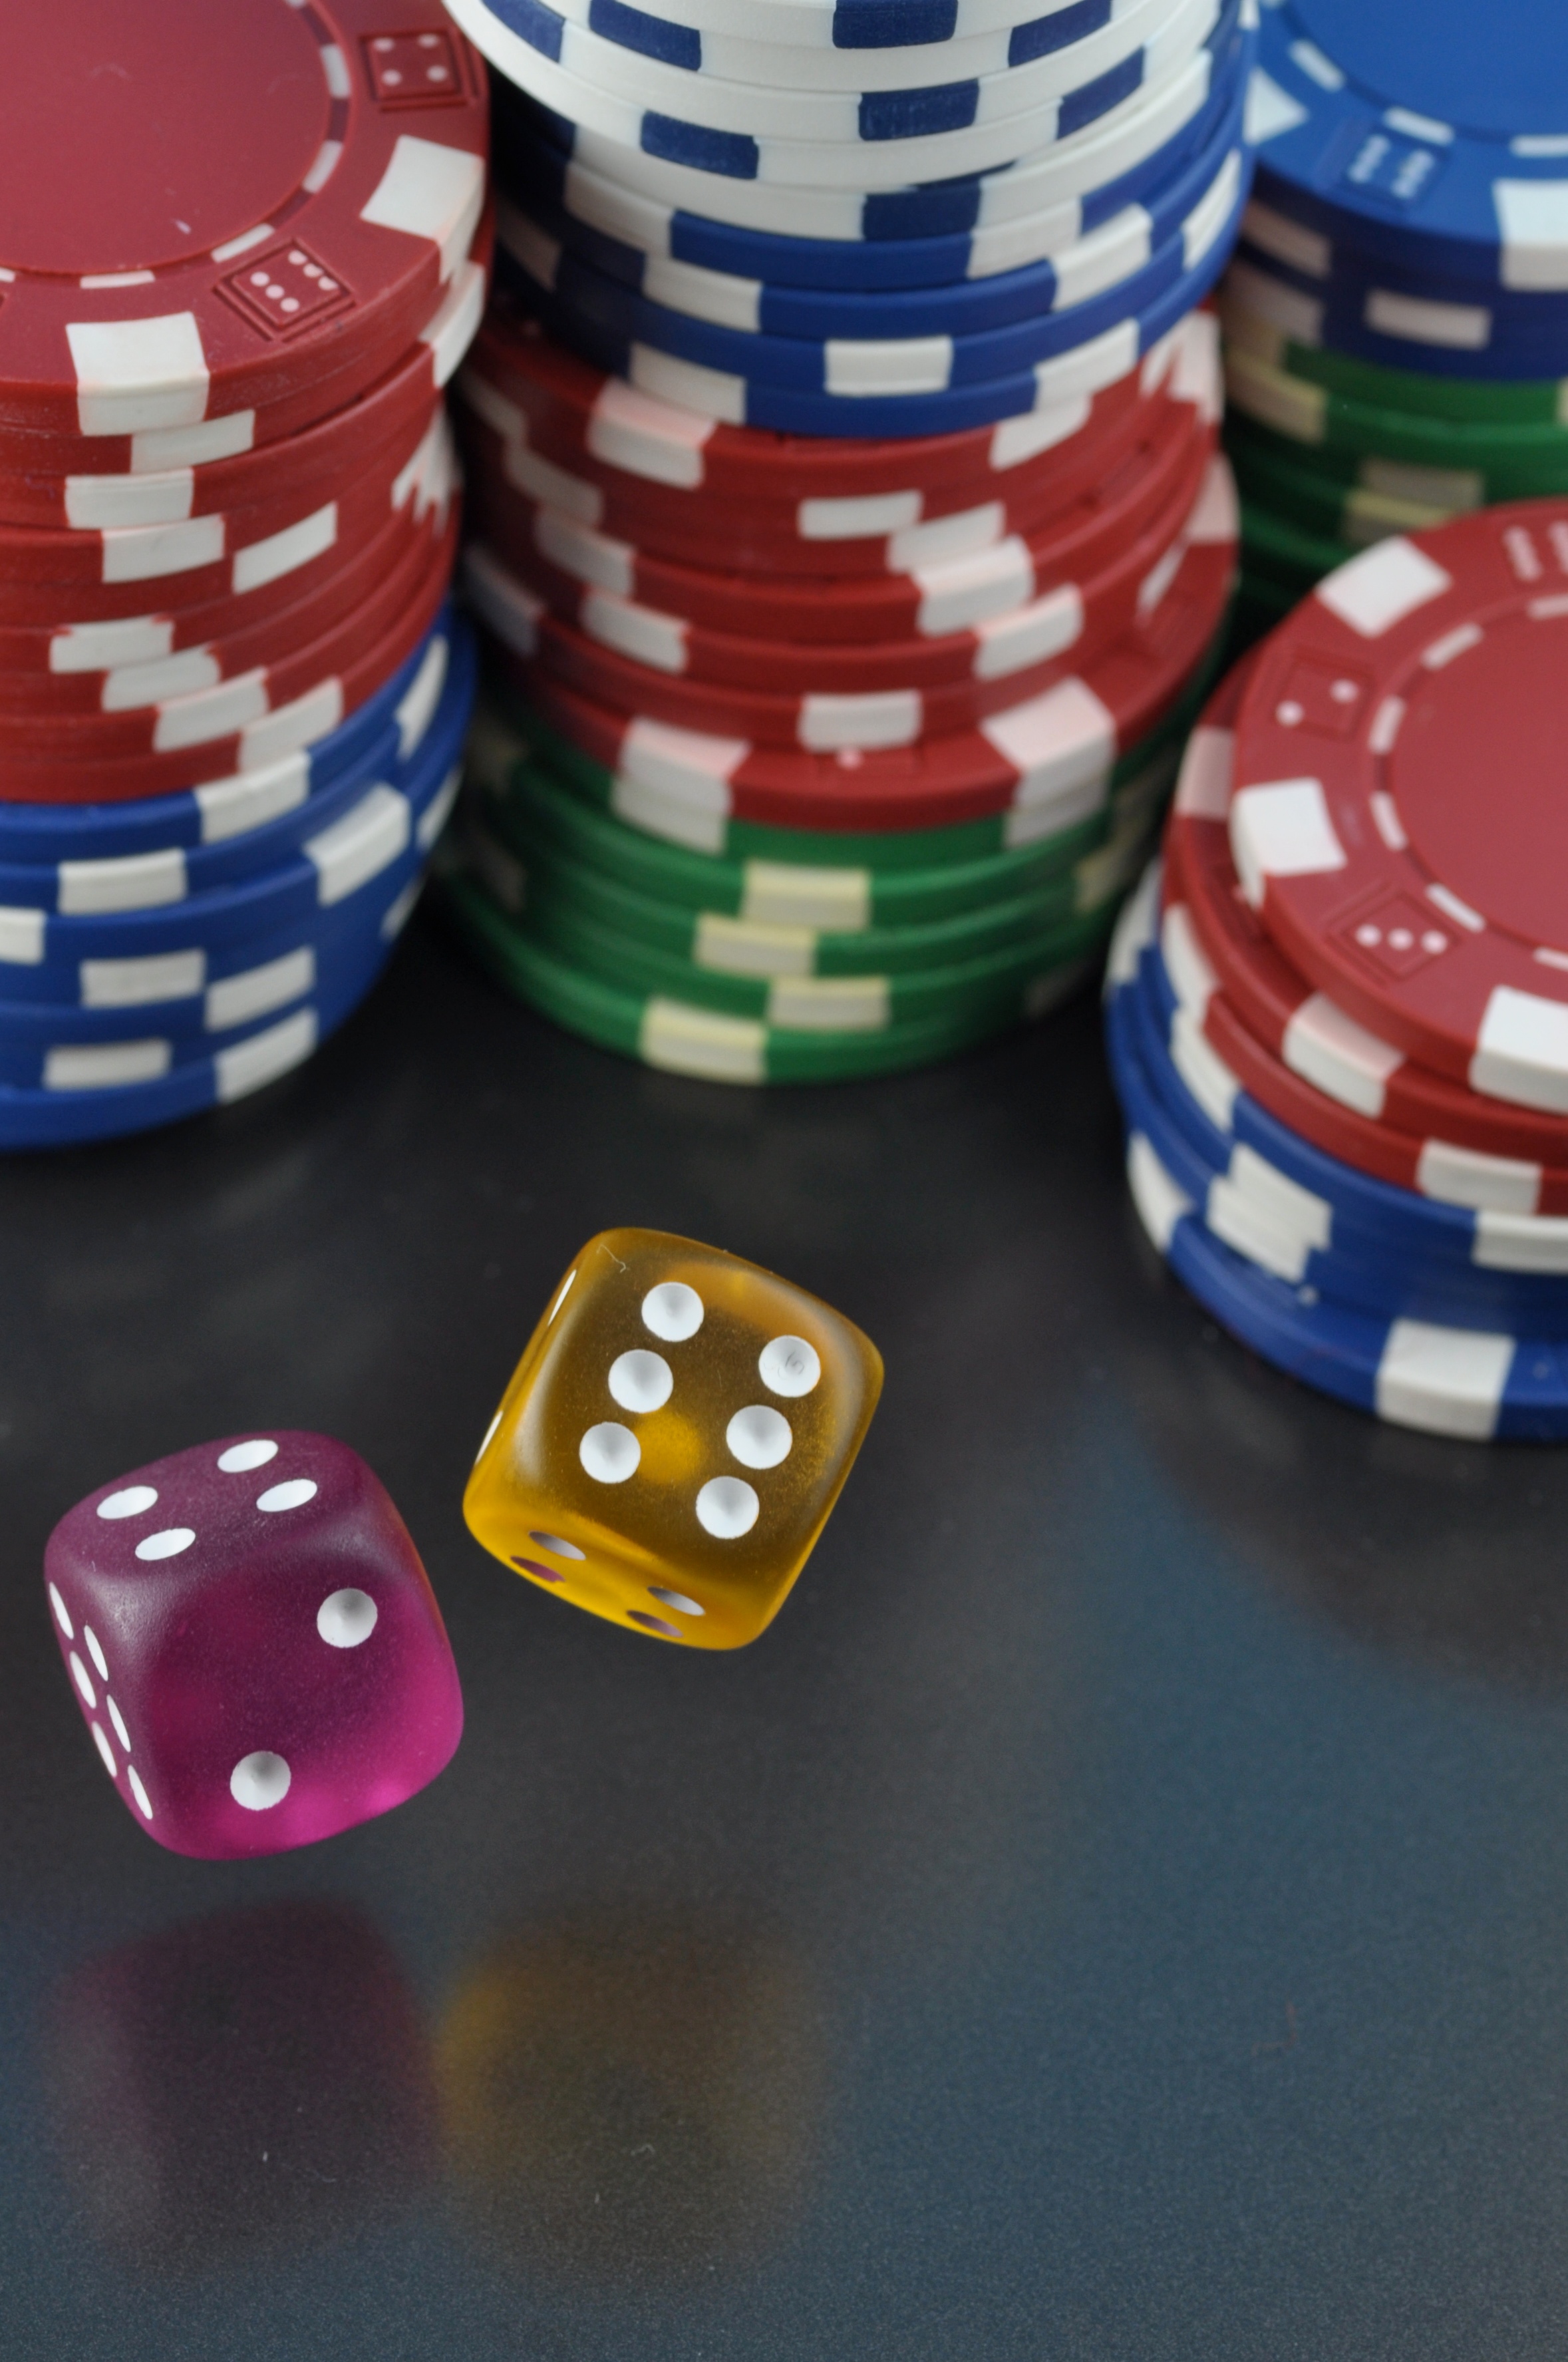 3. Engaging Storylines of Popular Gambling Movies